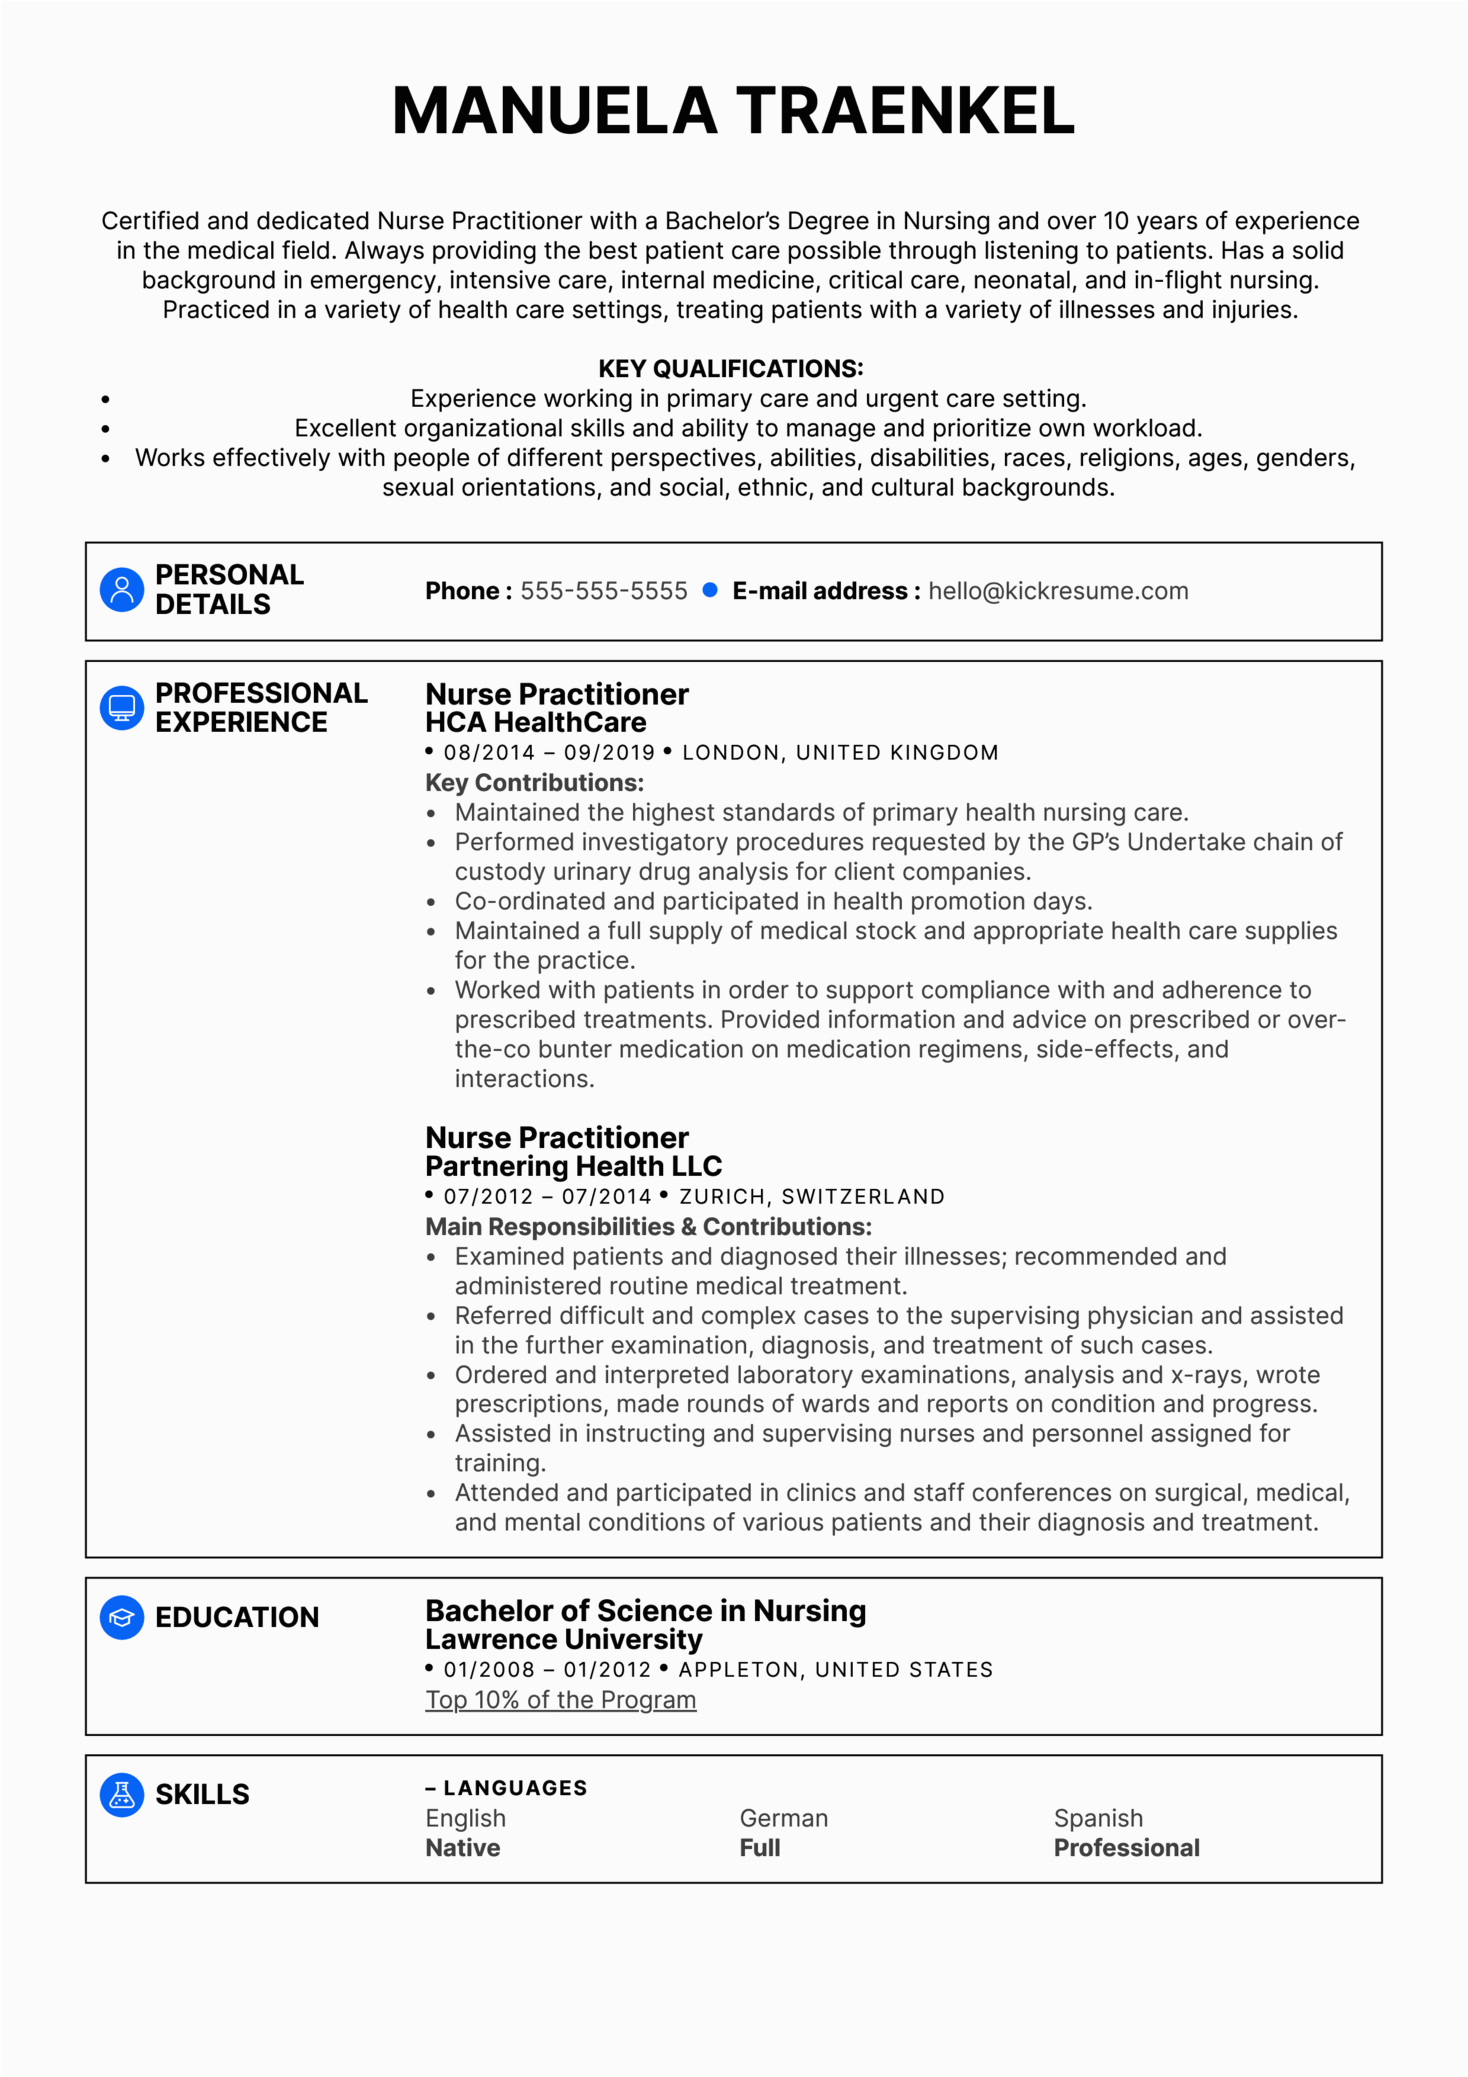 Sample Resume for Nurse Practitioner School Nurse Practitioner Resume Example